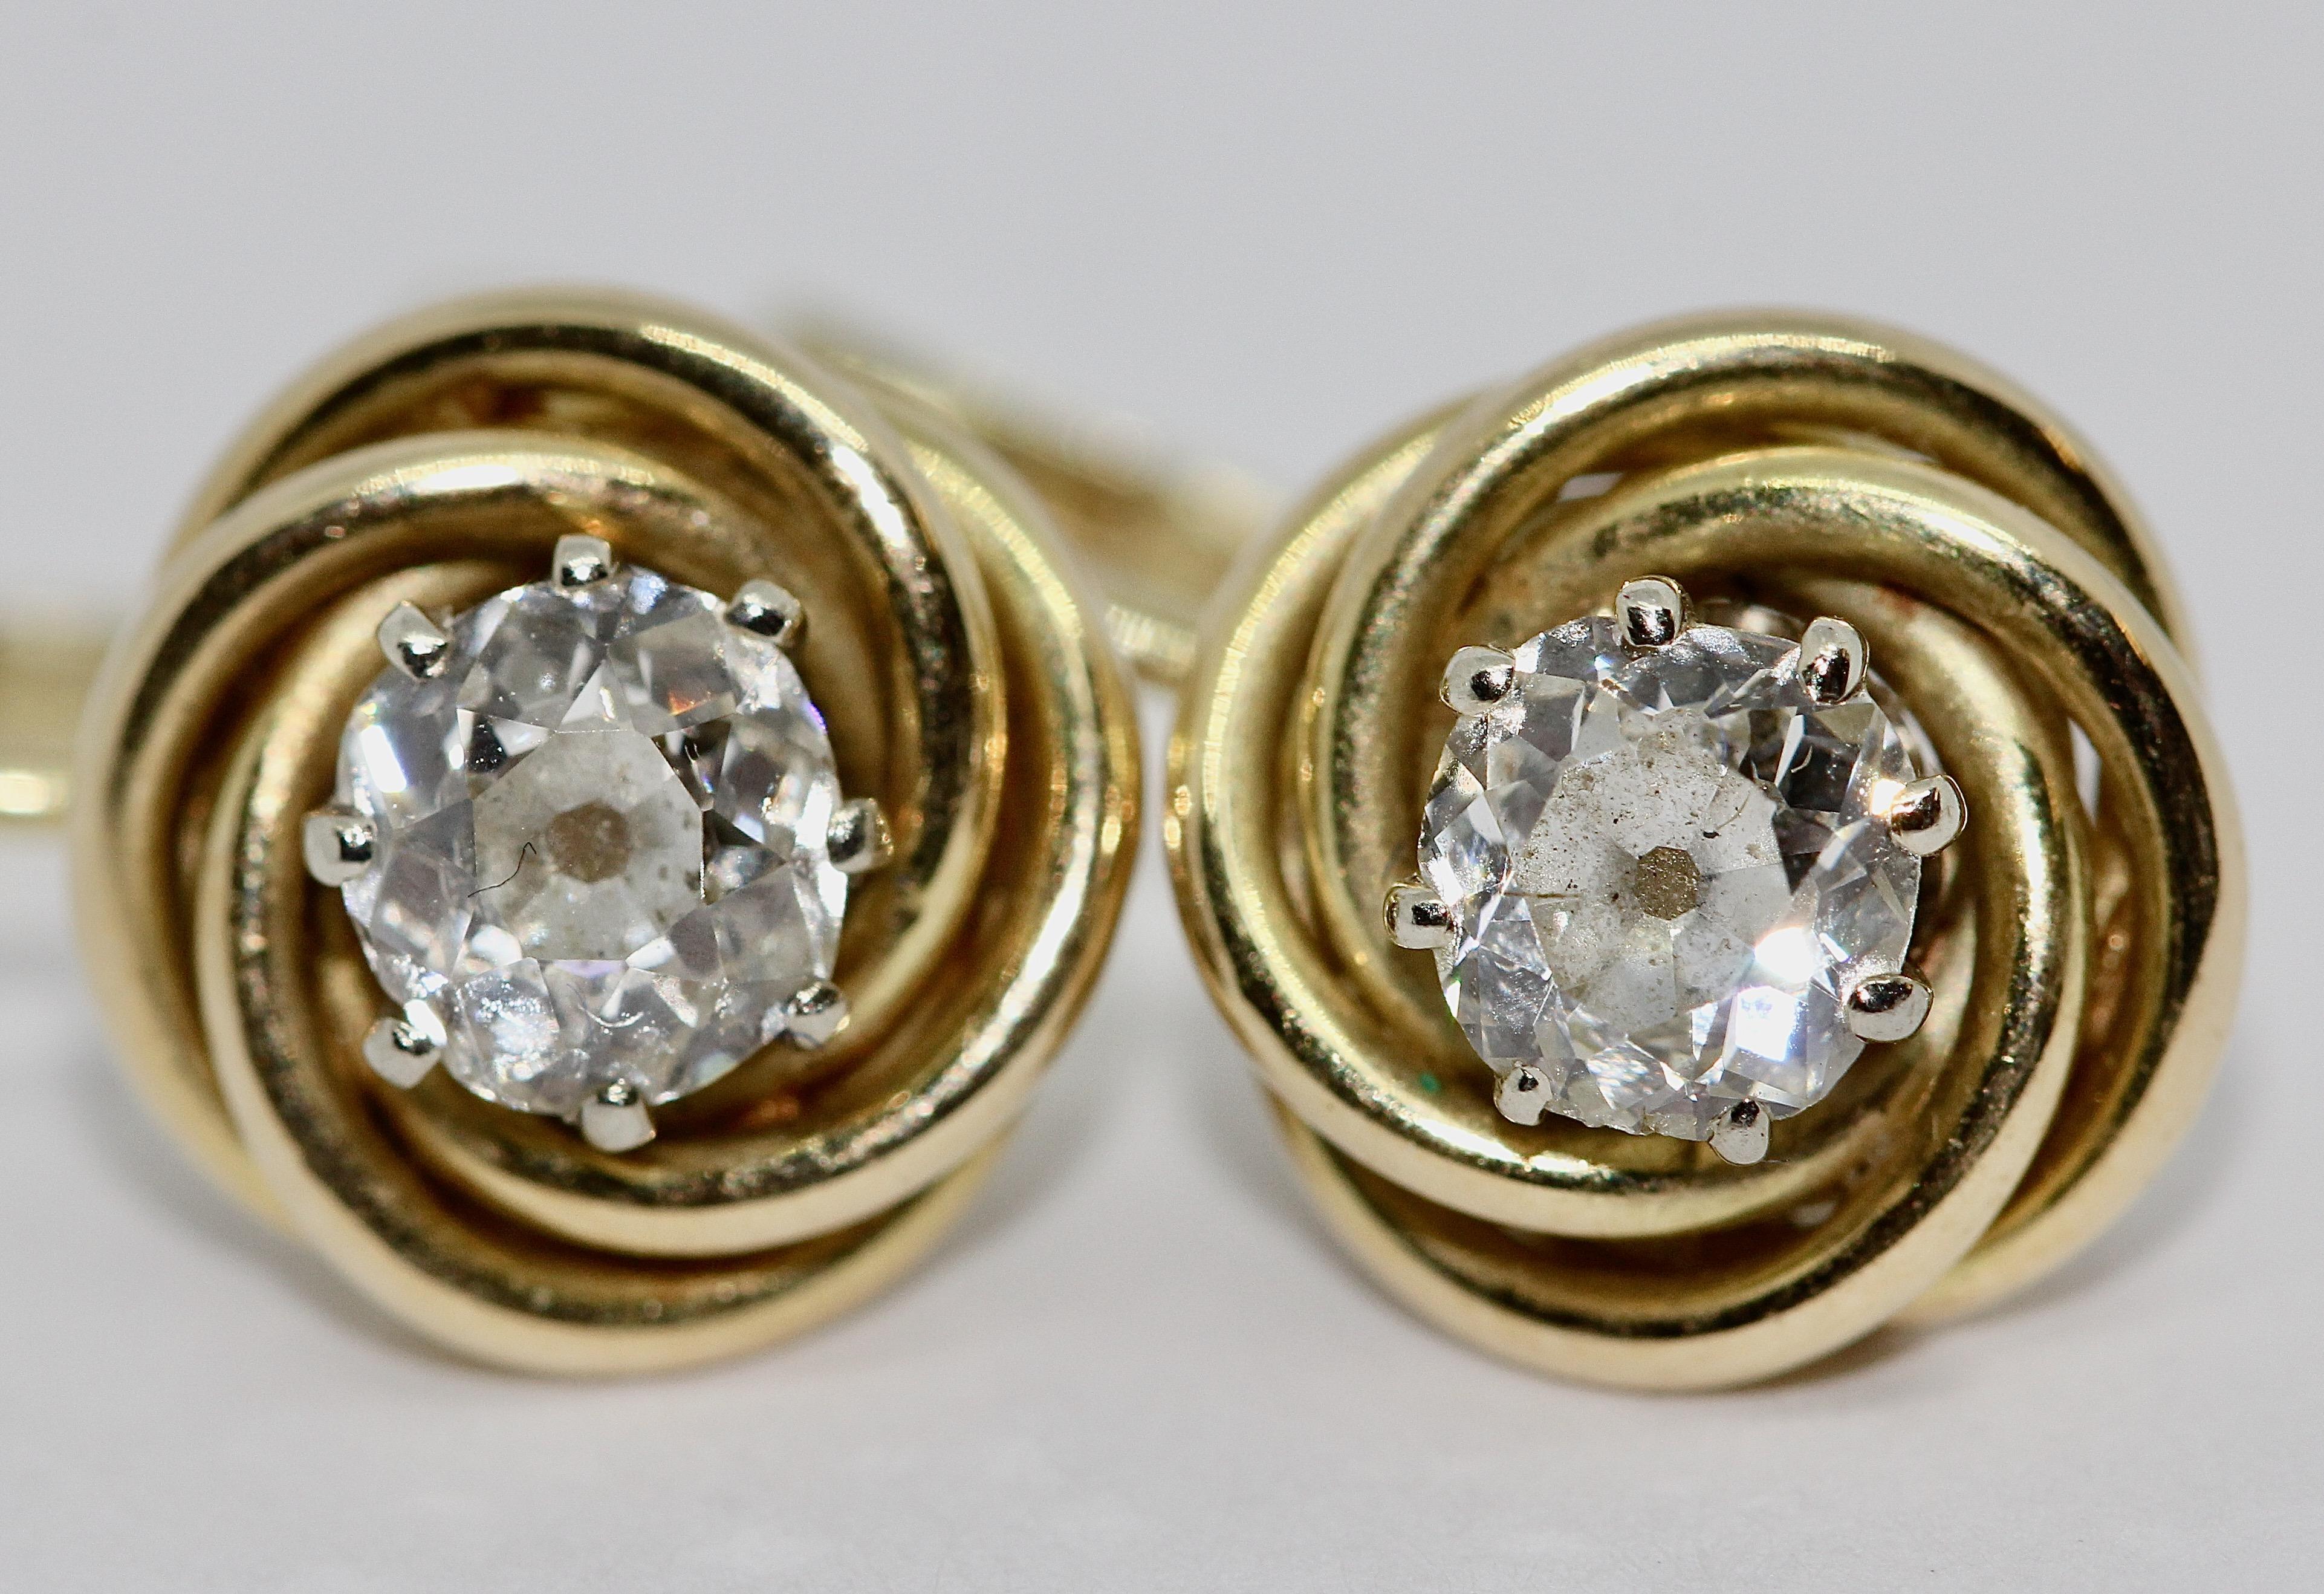 Petite diamond earrings, stud earrings. 14 Karat gold.

Diamond approx. 0.35 carat each.

Including certificate of authenticity.